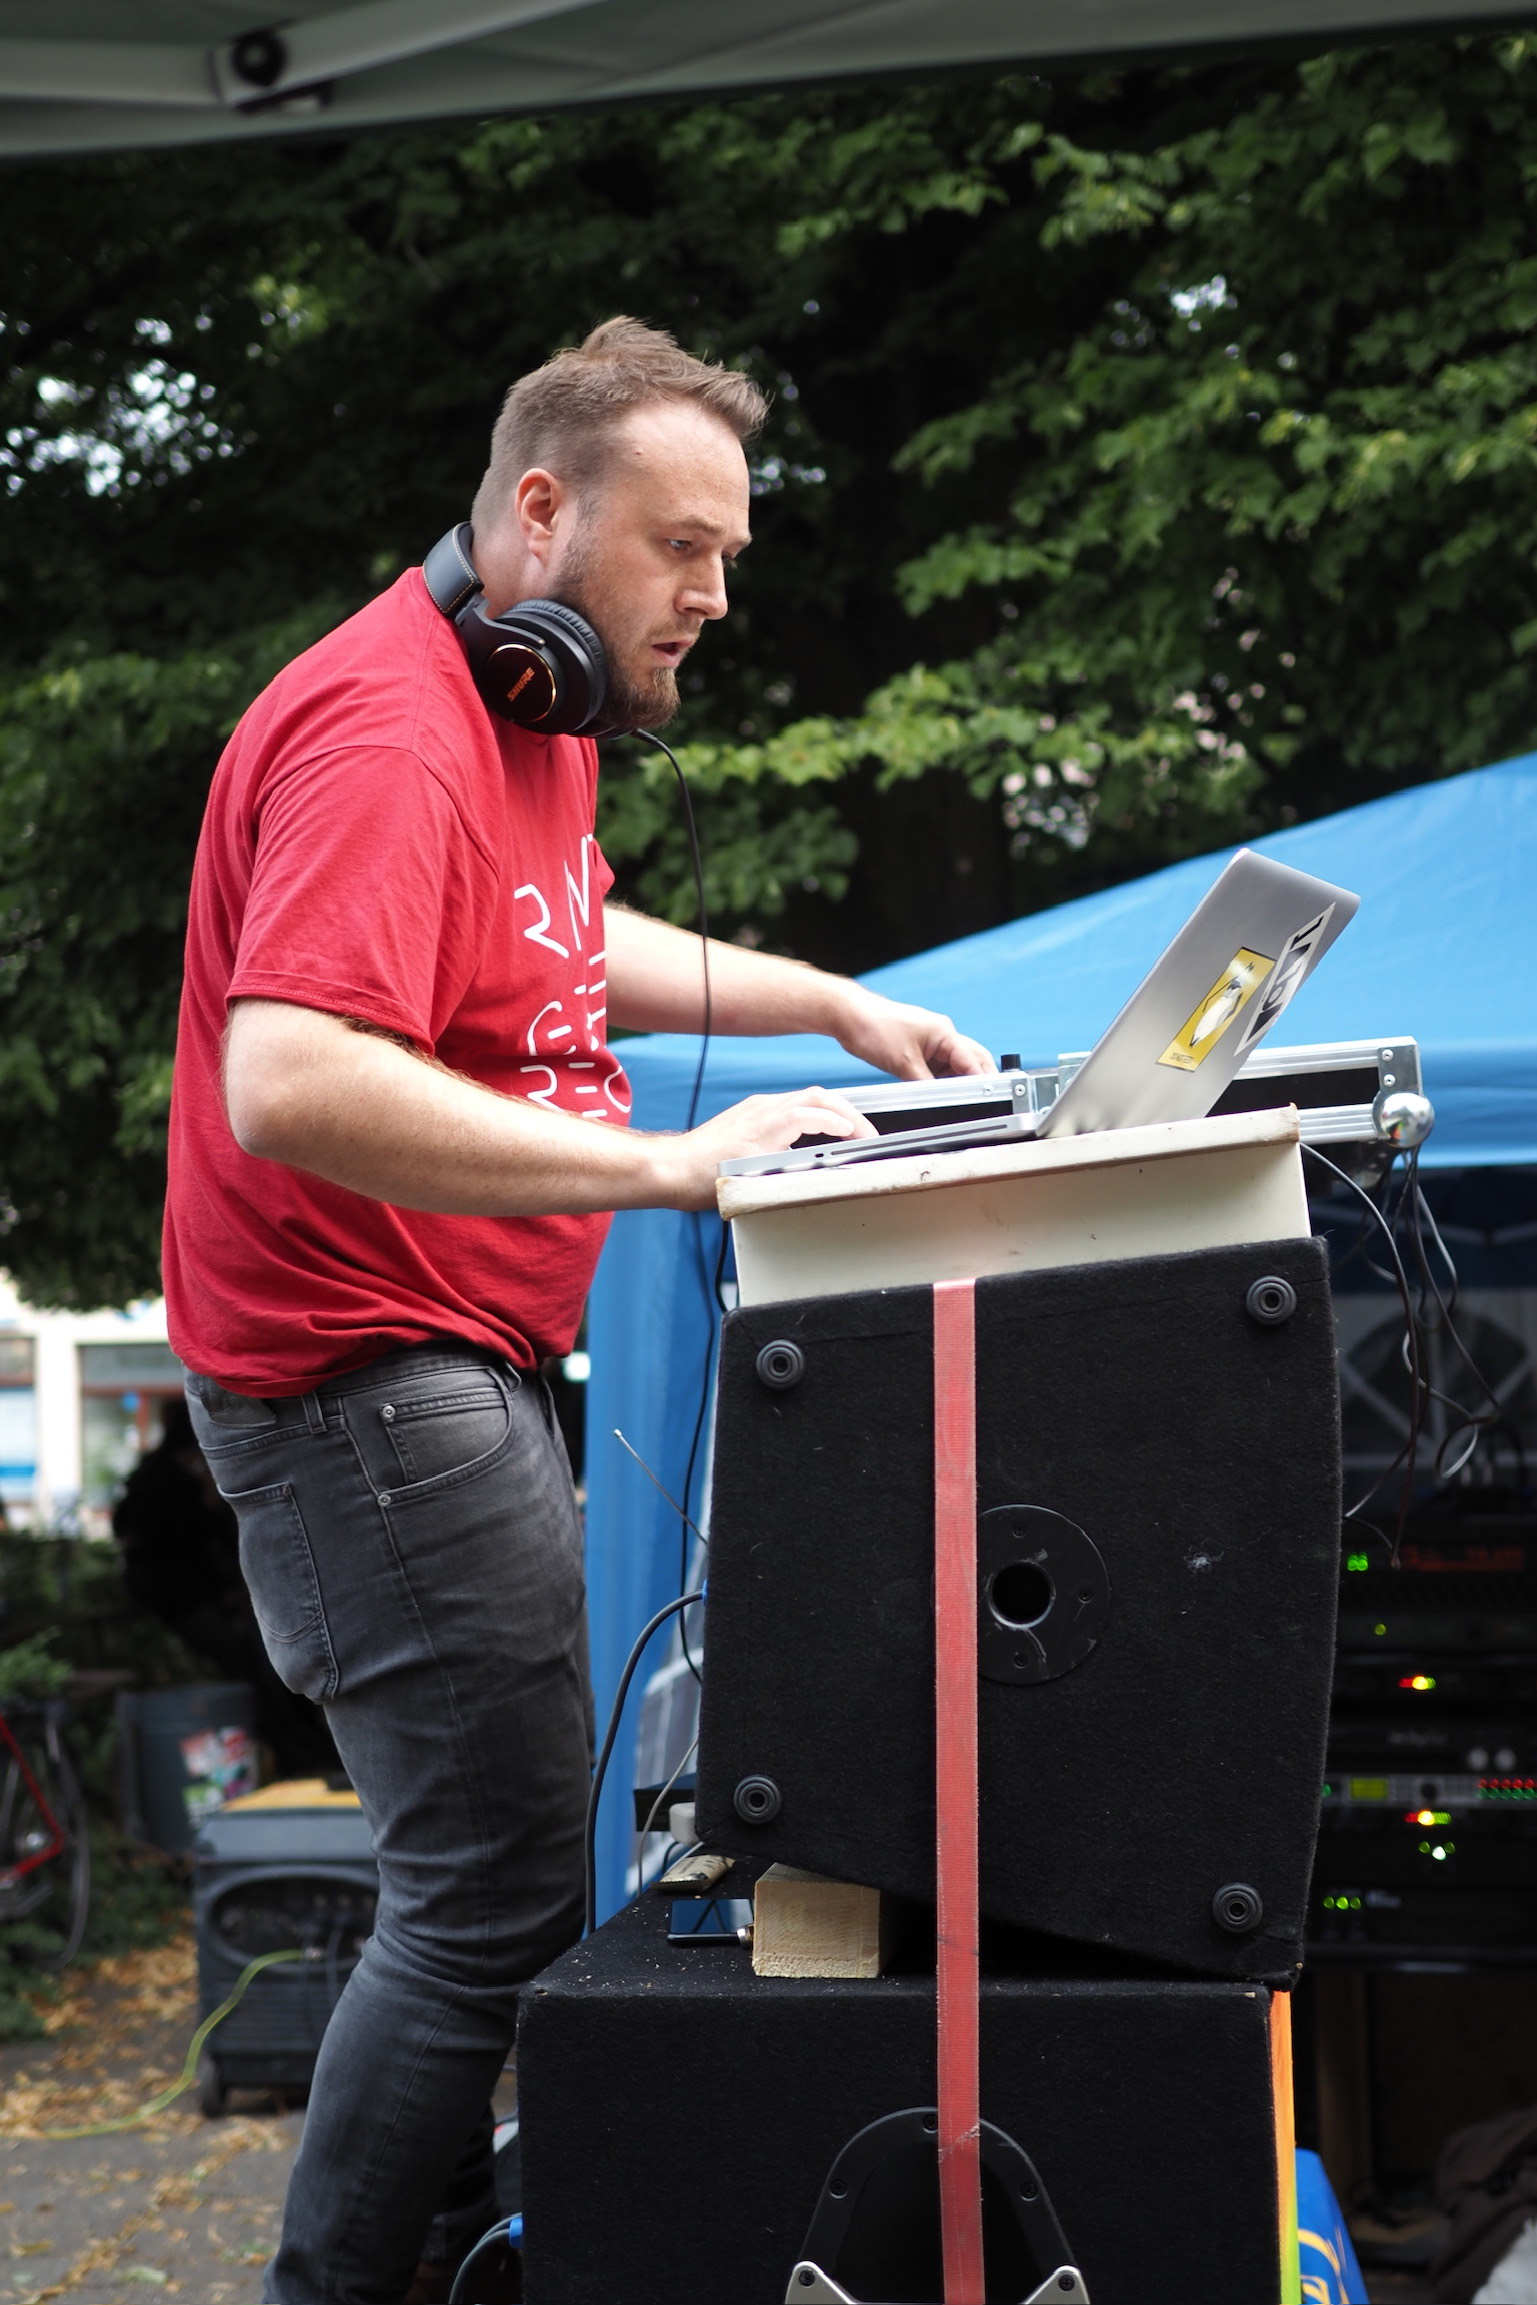 Maik Blessau, aka DJ Marmuto, playing at the rave.